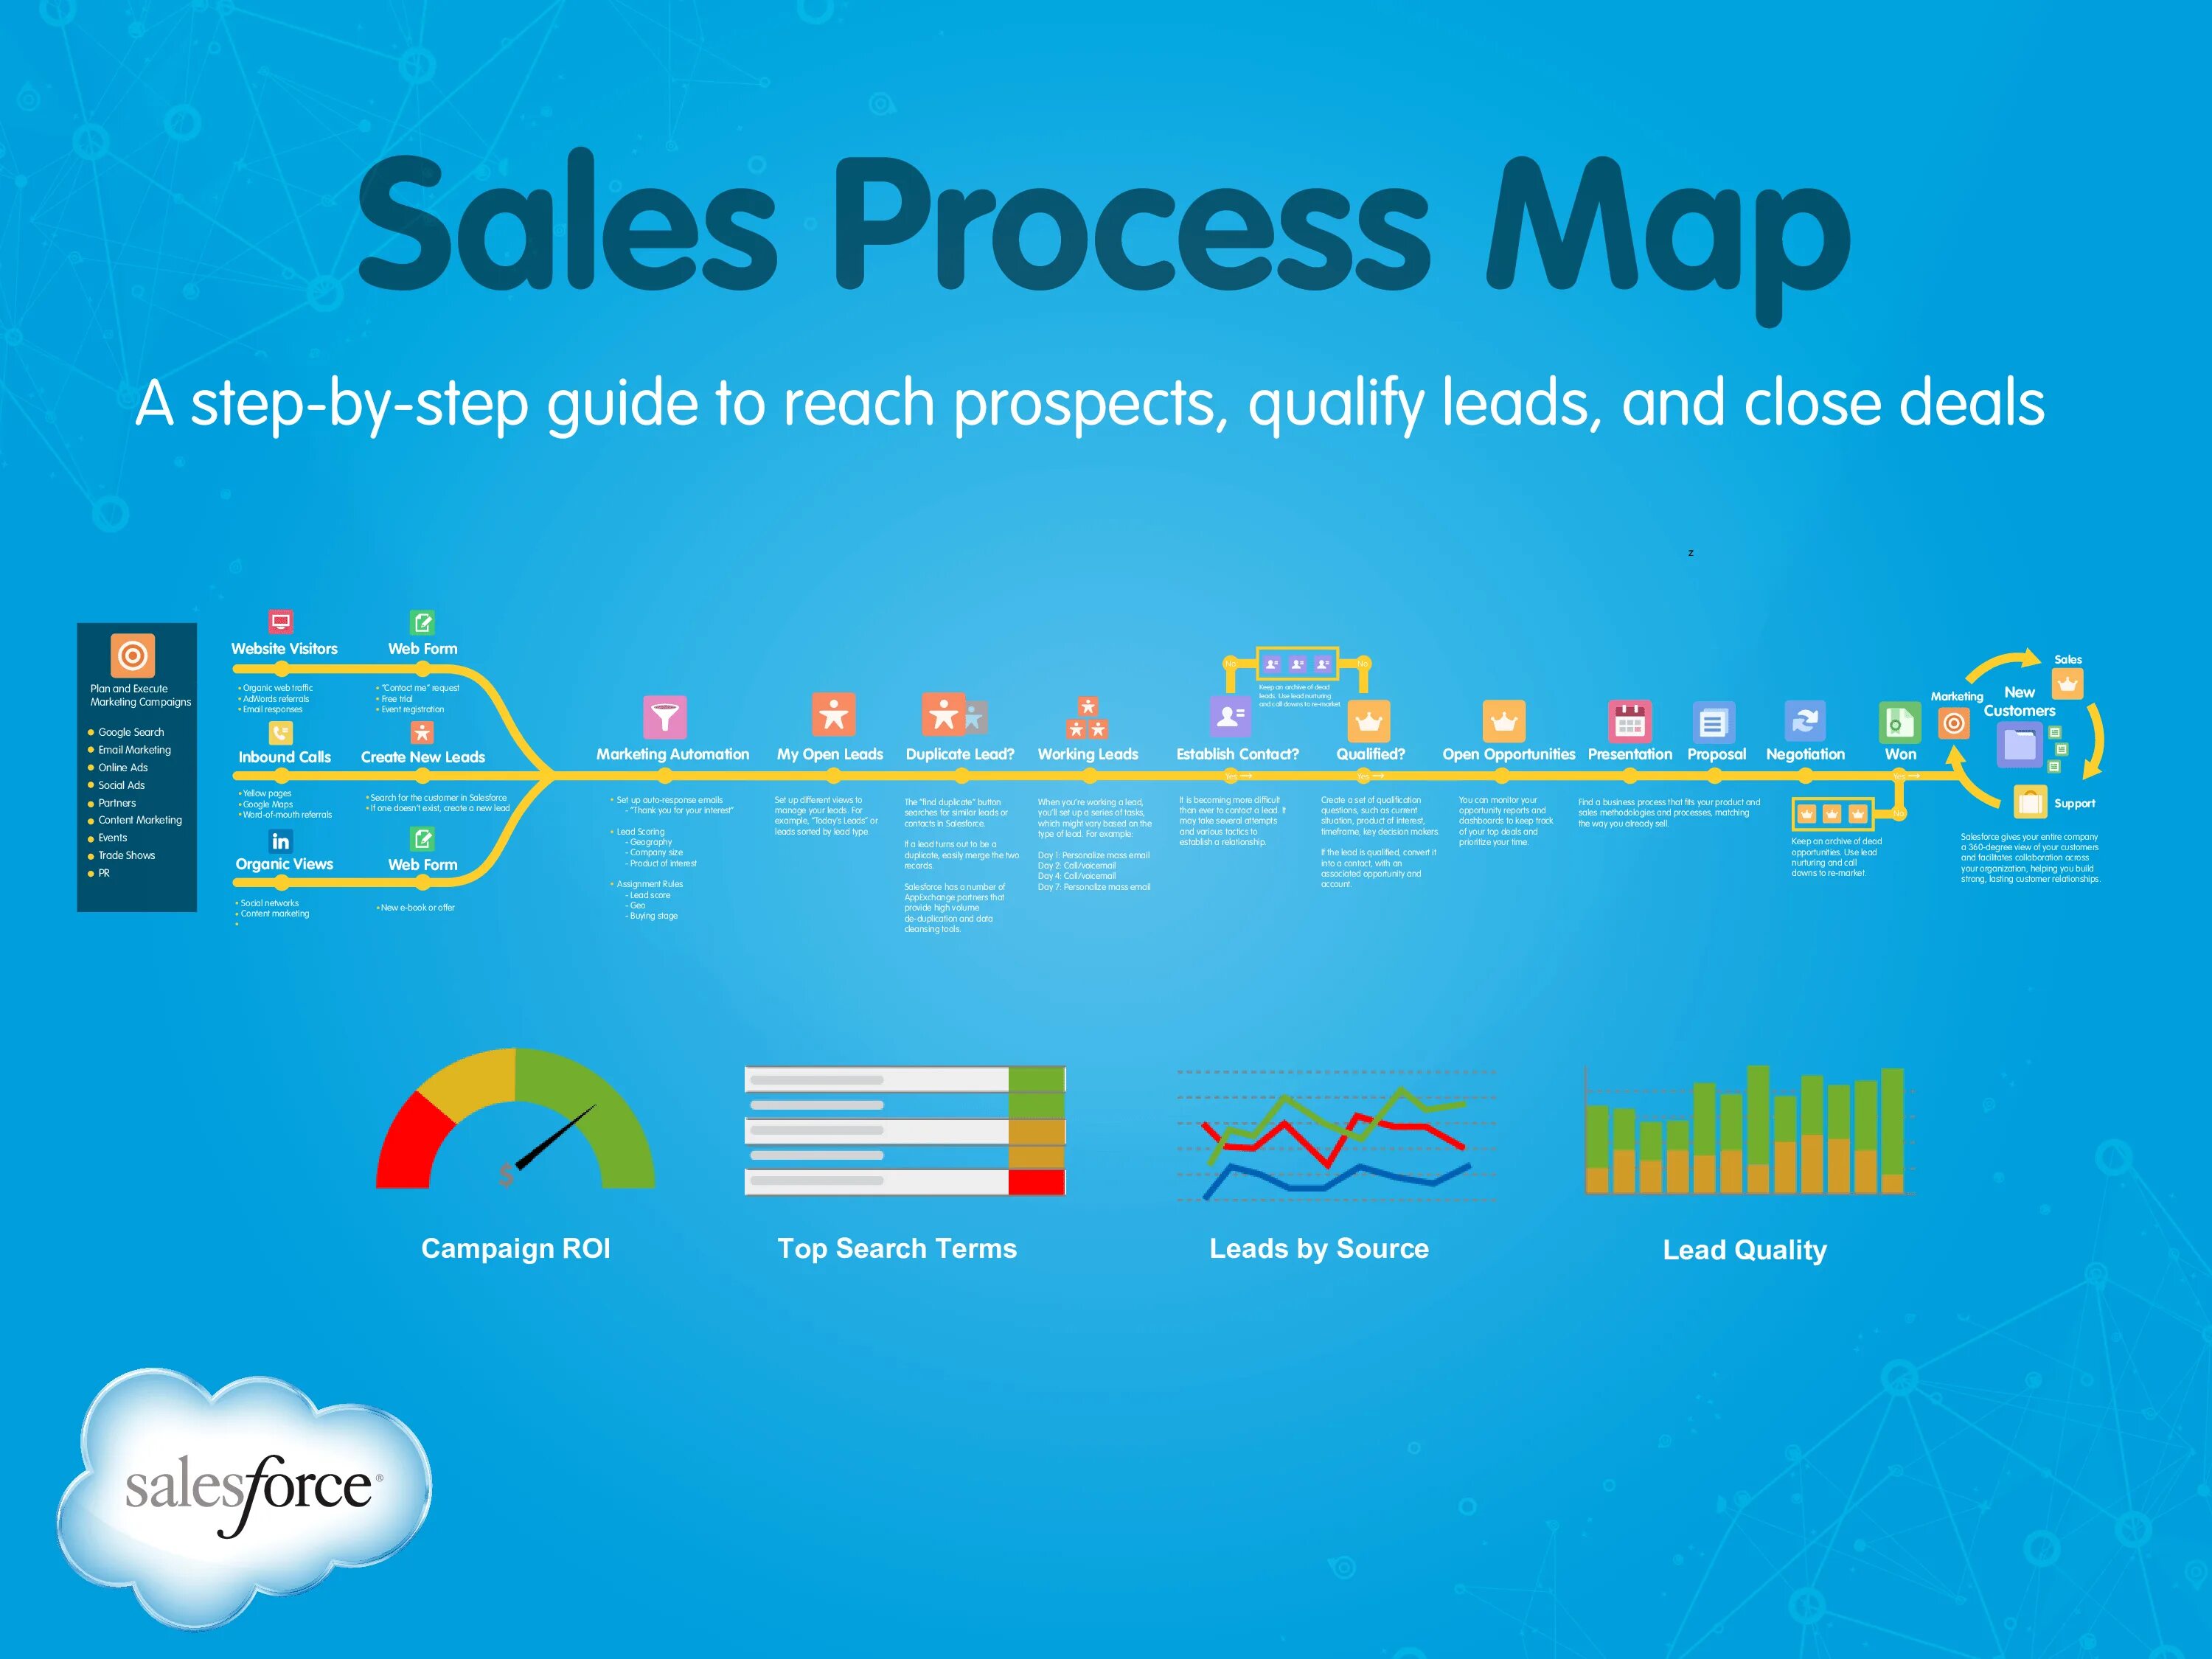 Sales process steps. Sales Map. Microsoft sales process. Sales Tools and process. Sales processing